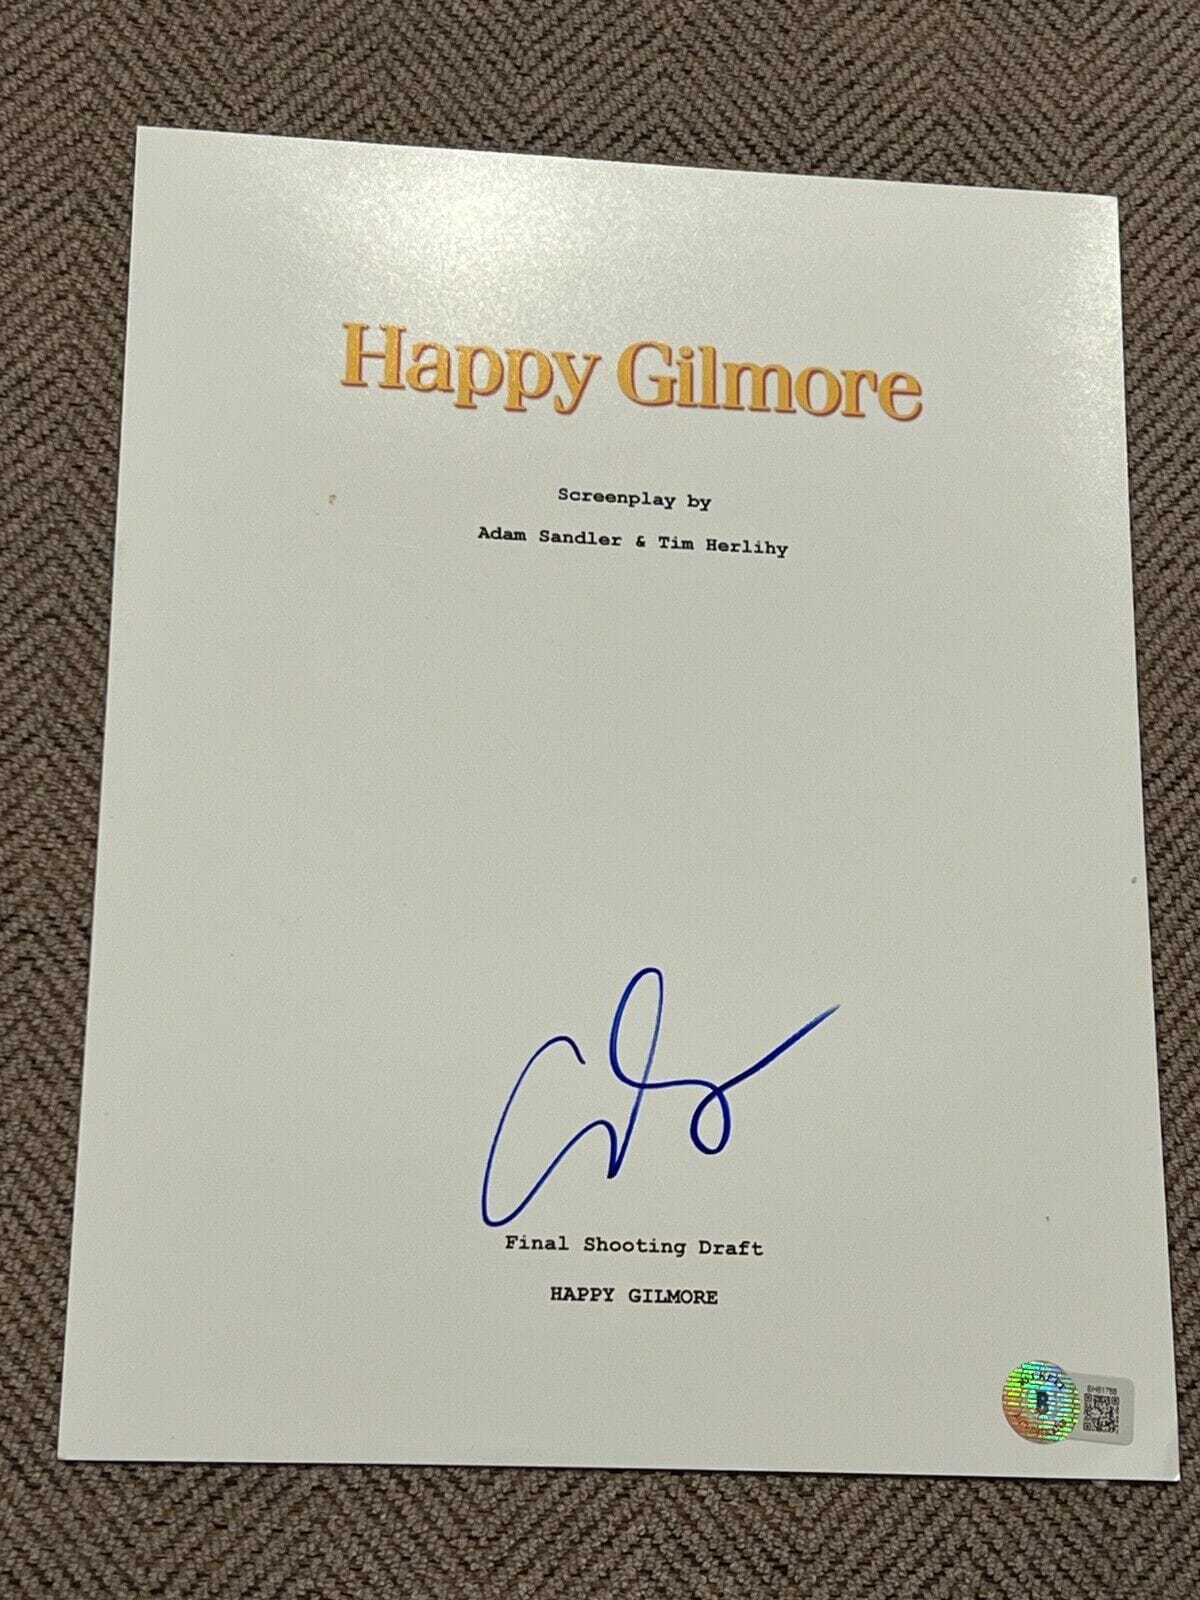 Adam Sandler Signed 'Happy Gilmore' Funko Pop (PSA/DNA COA)